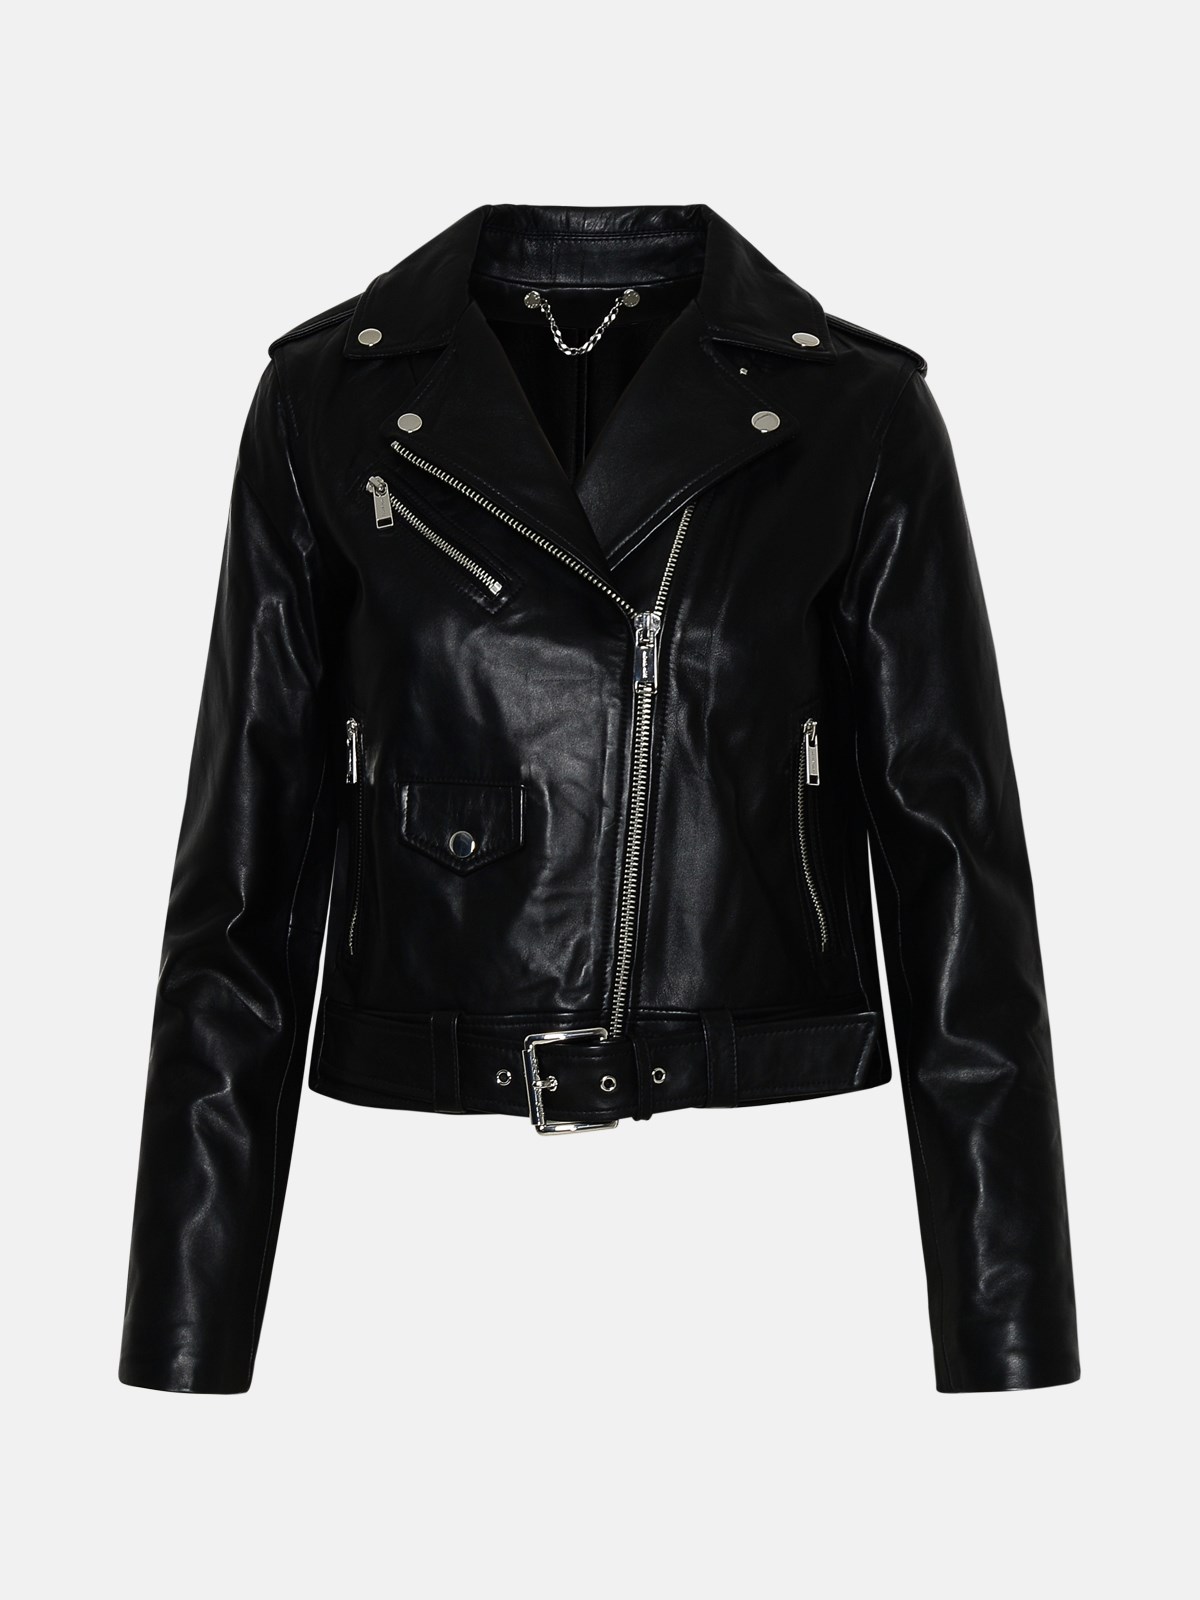 Michael Michael Kors Black Leather Jacket